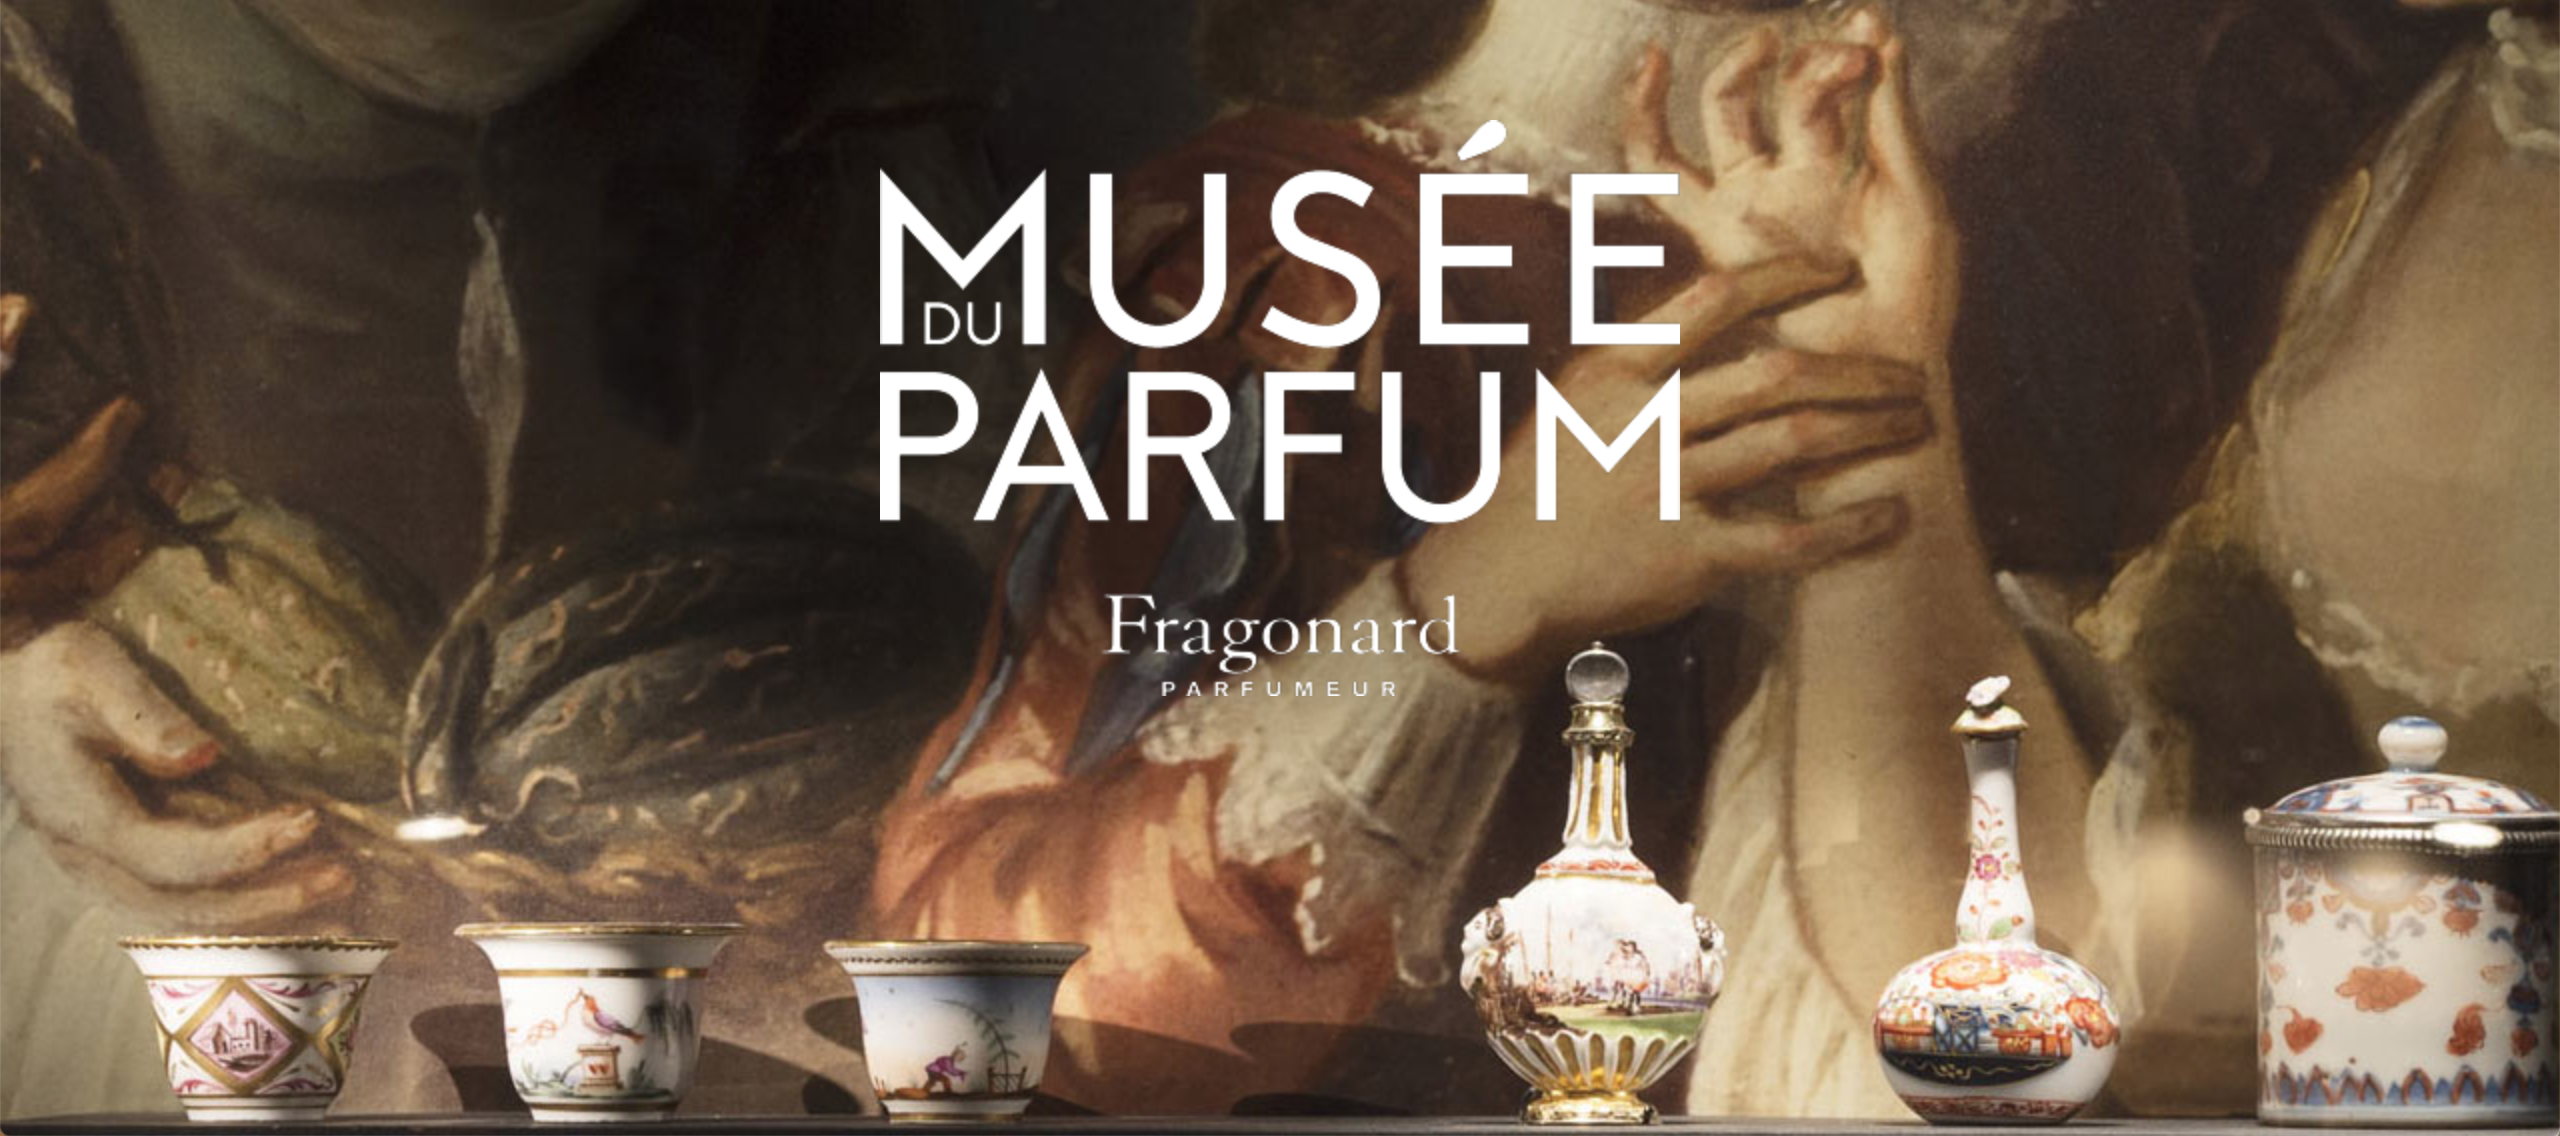 Musee du parfum Fragonard